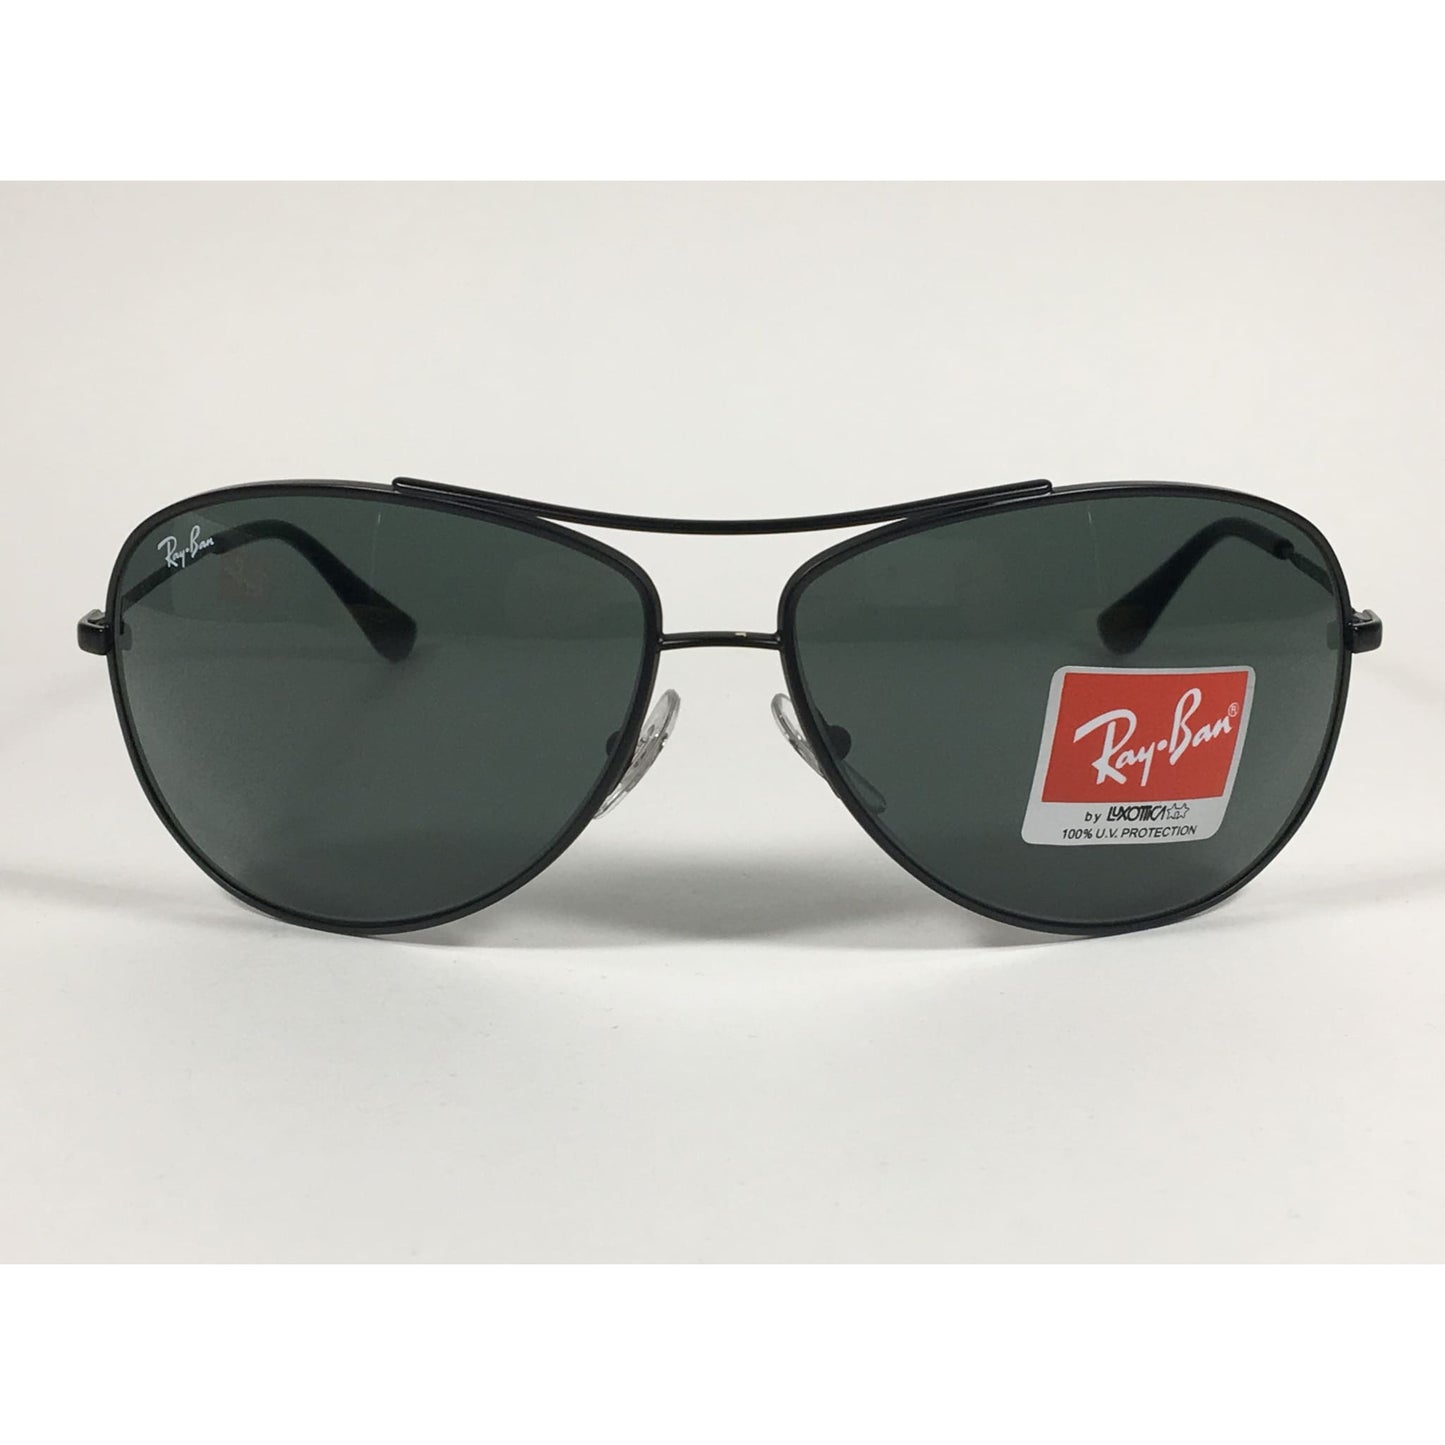 Ray-Ban Highstreet Aviator Pilot Sunglasses Matte Black Green Lens RB3293 006/71 - Sunglasses